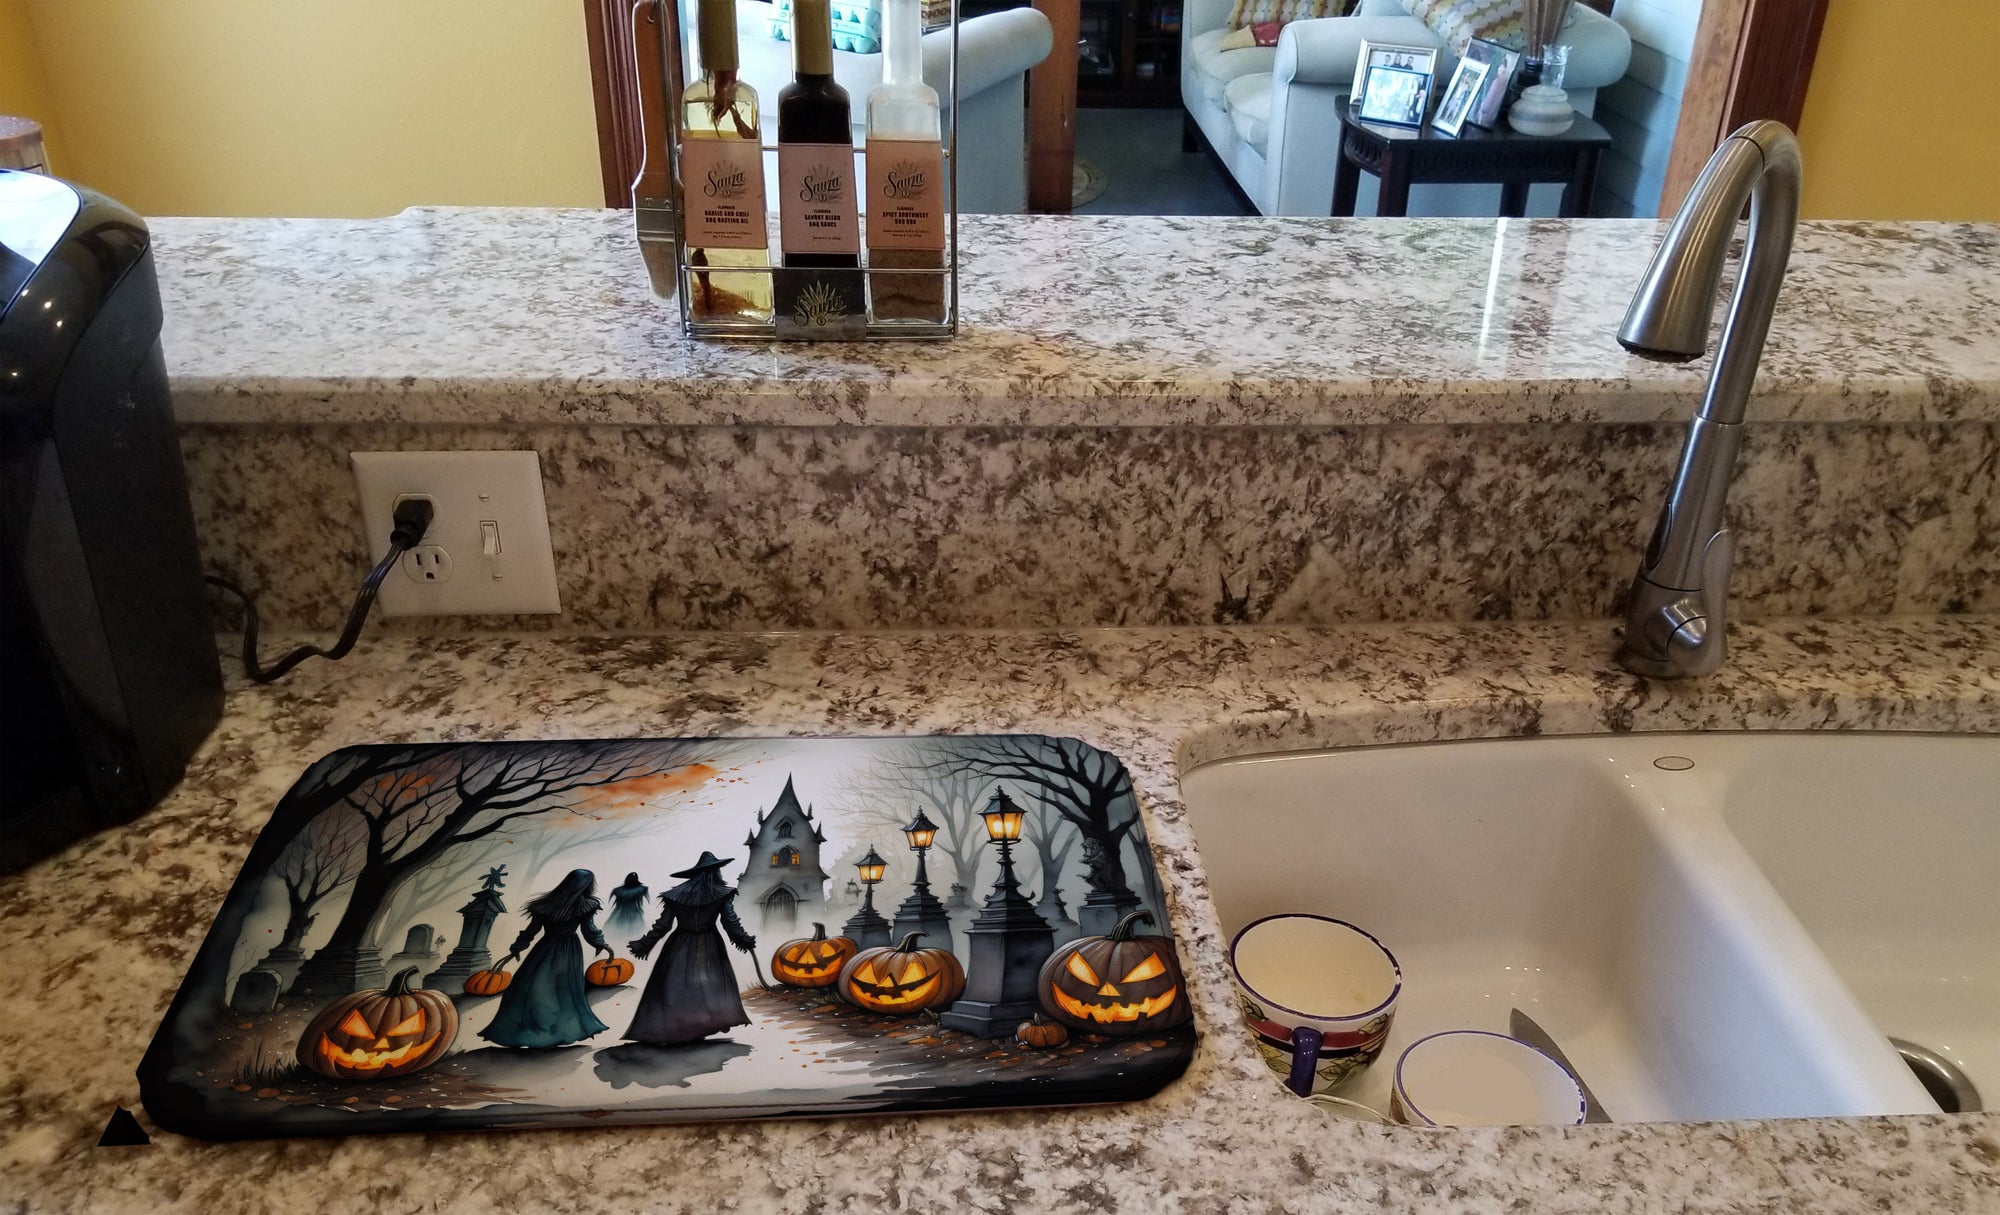 Buy this Vampires Spooky Halloween Dish Drying Mat